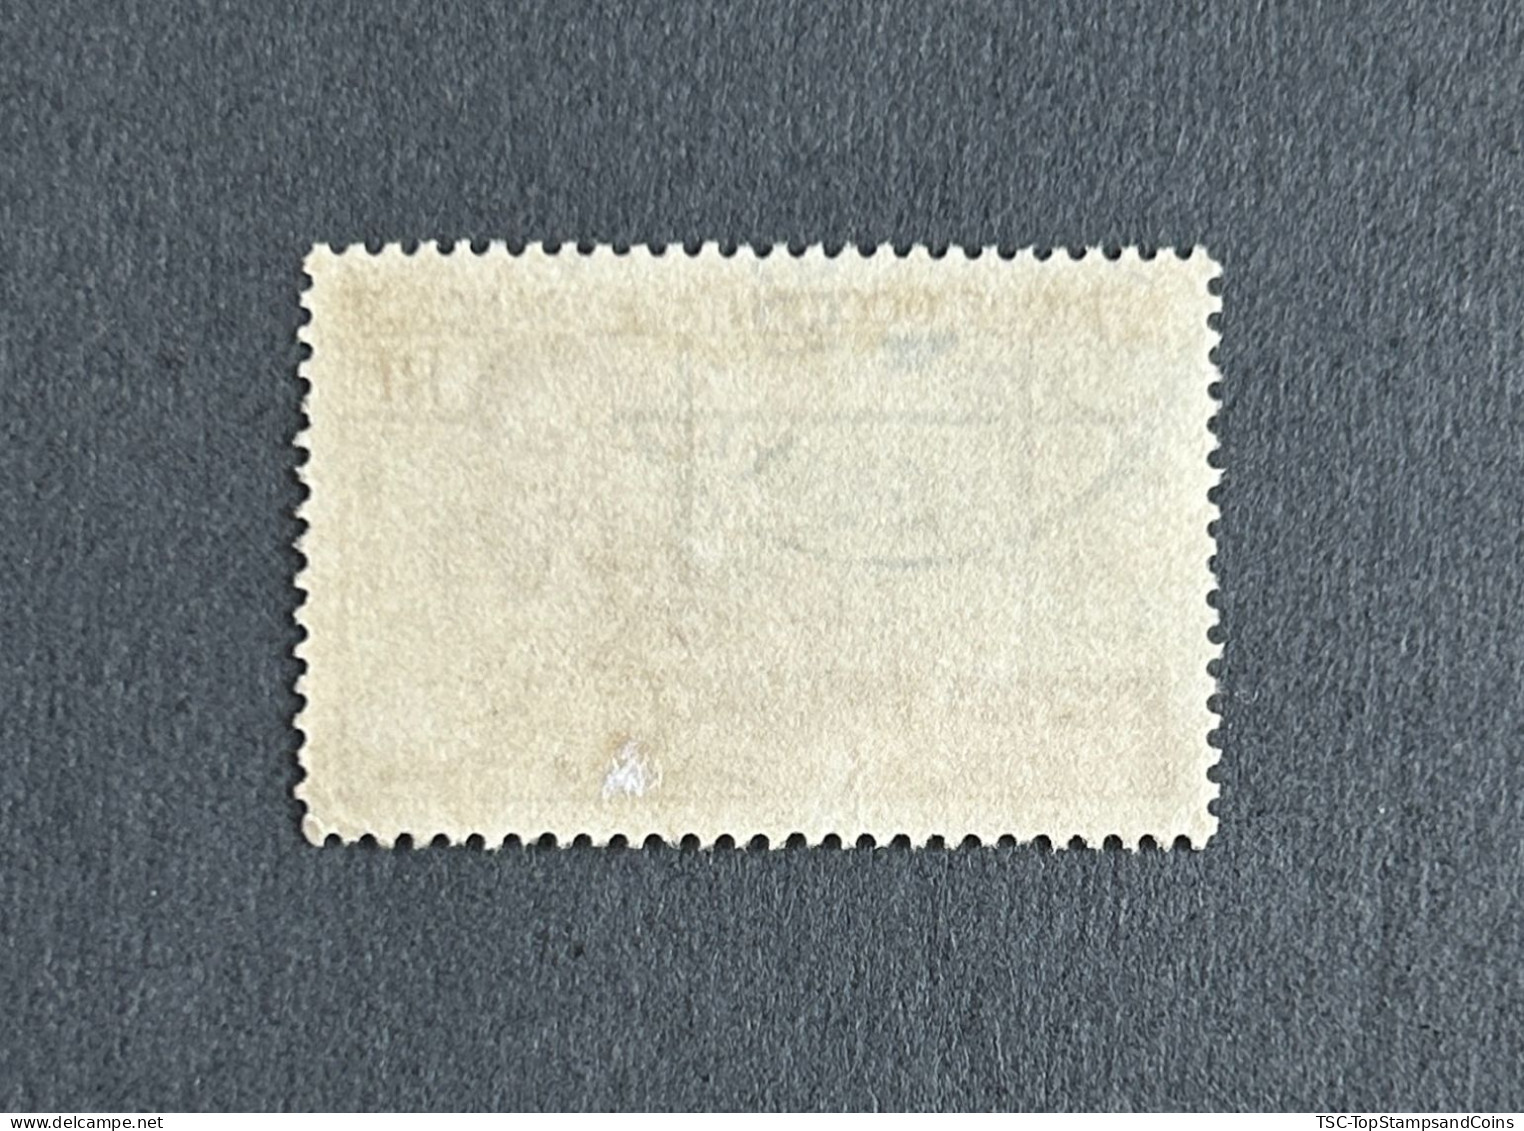 FRAWA0048U1 - Local People - Medical Laboratory - 15 F Used Stamp - AOF - 1953 - Oblitérés